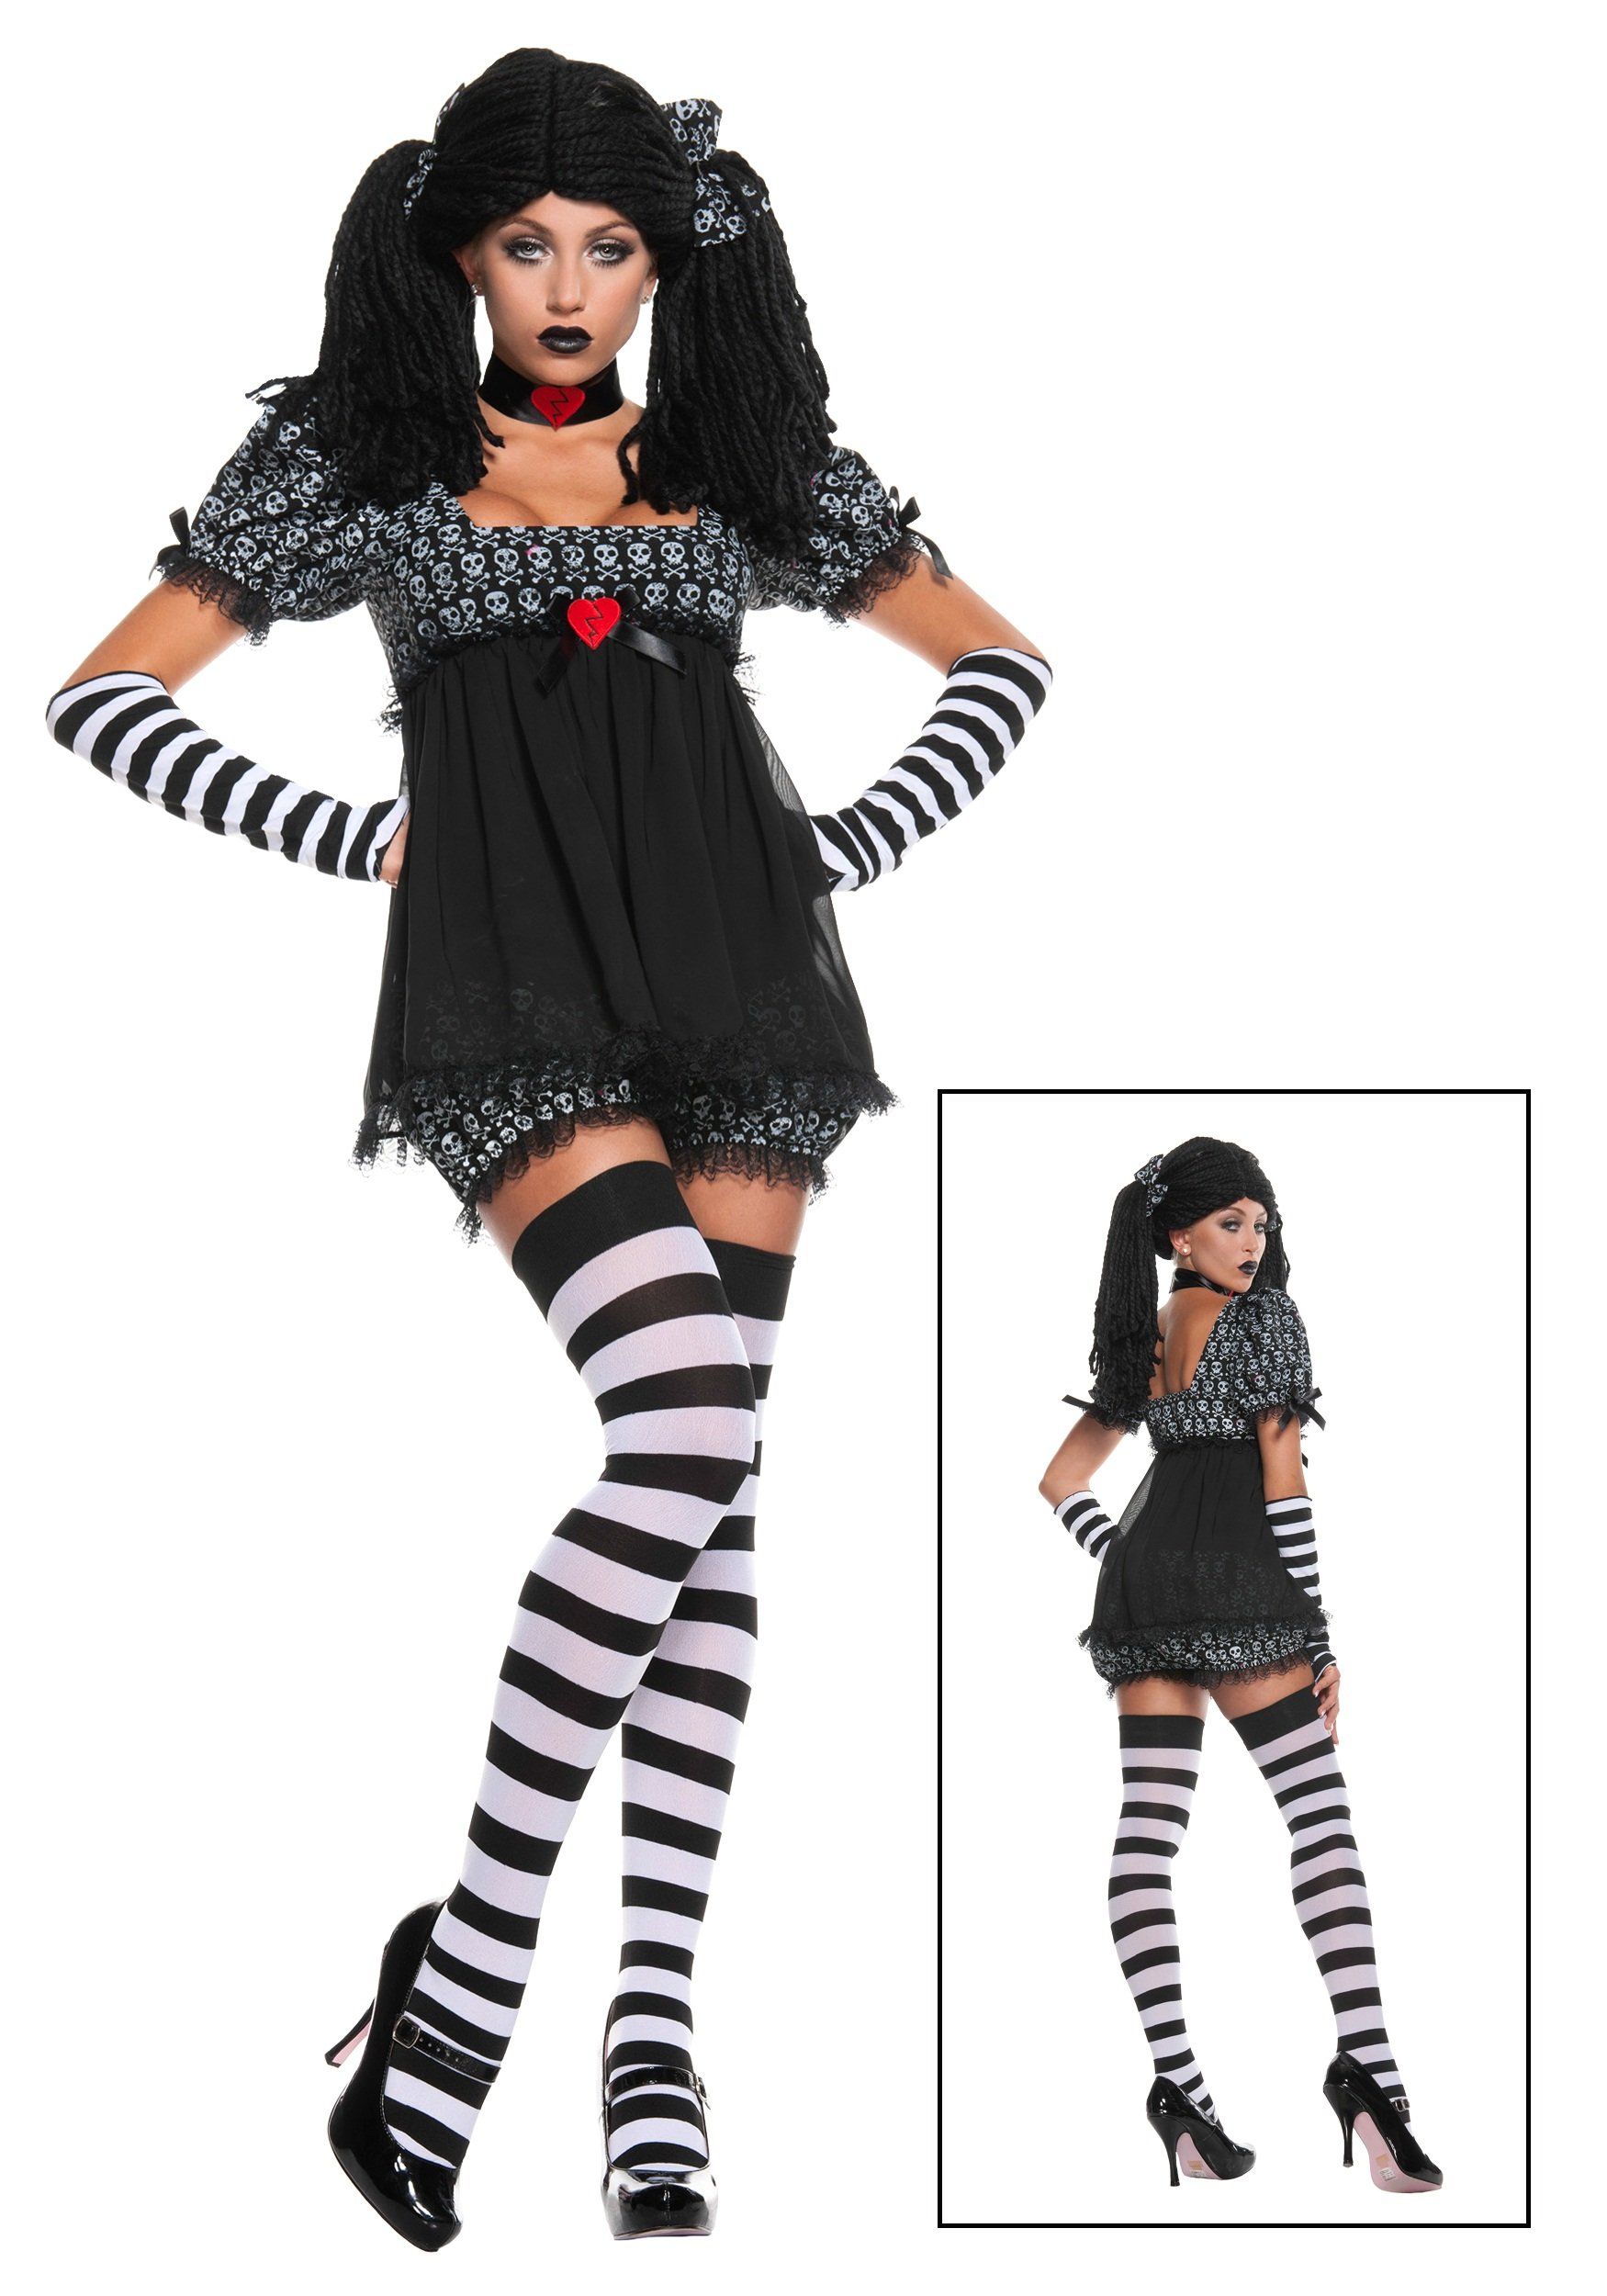 Goth slut halloween costume